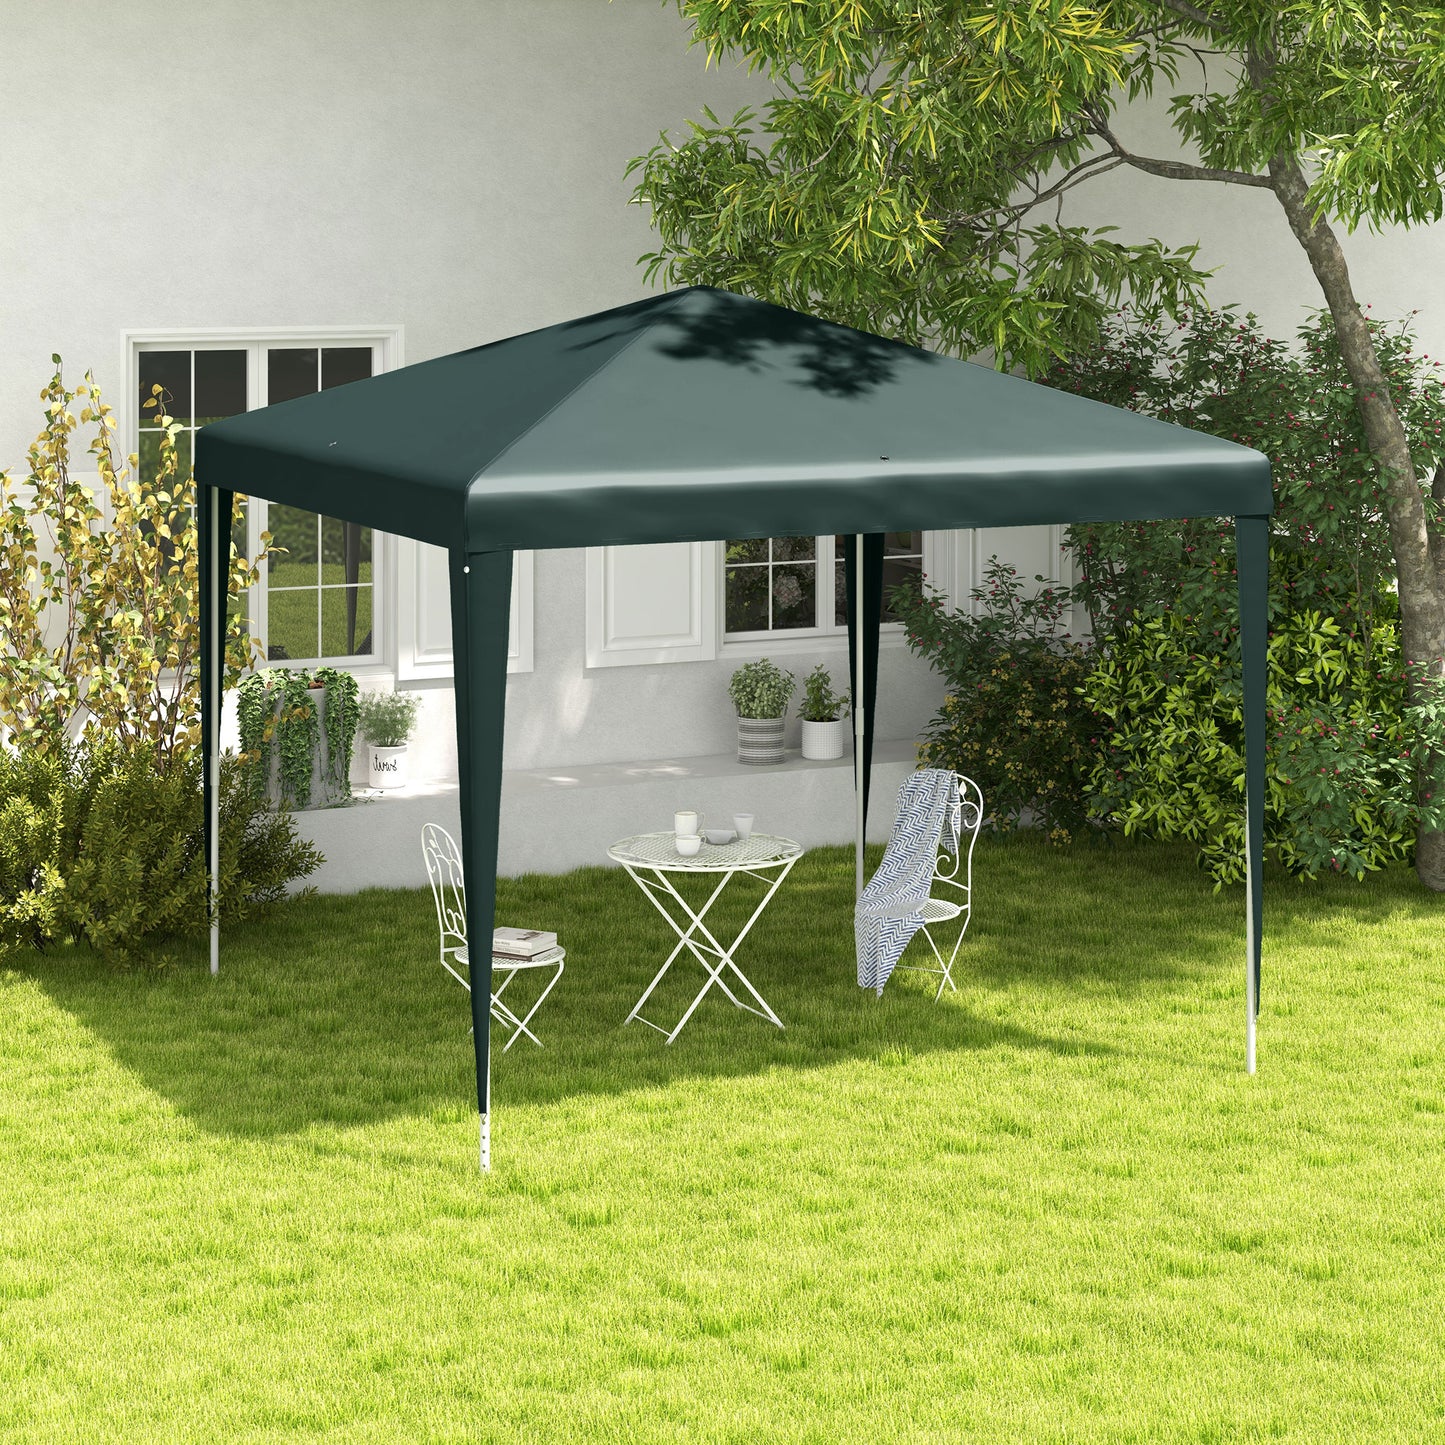 Outsunny 2.7m x 2.7m Garden Gazebo Marquee Party Tent Wedding Canopy Outdoor(Dark Green)